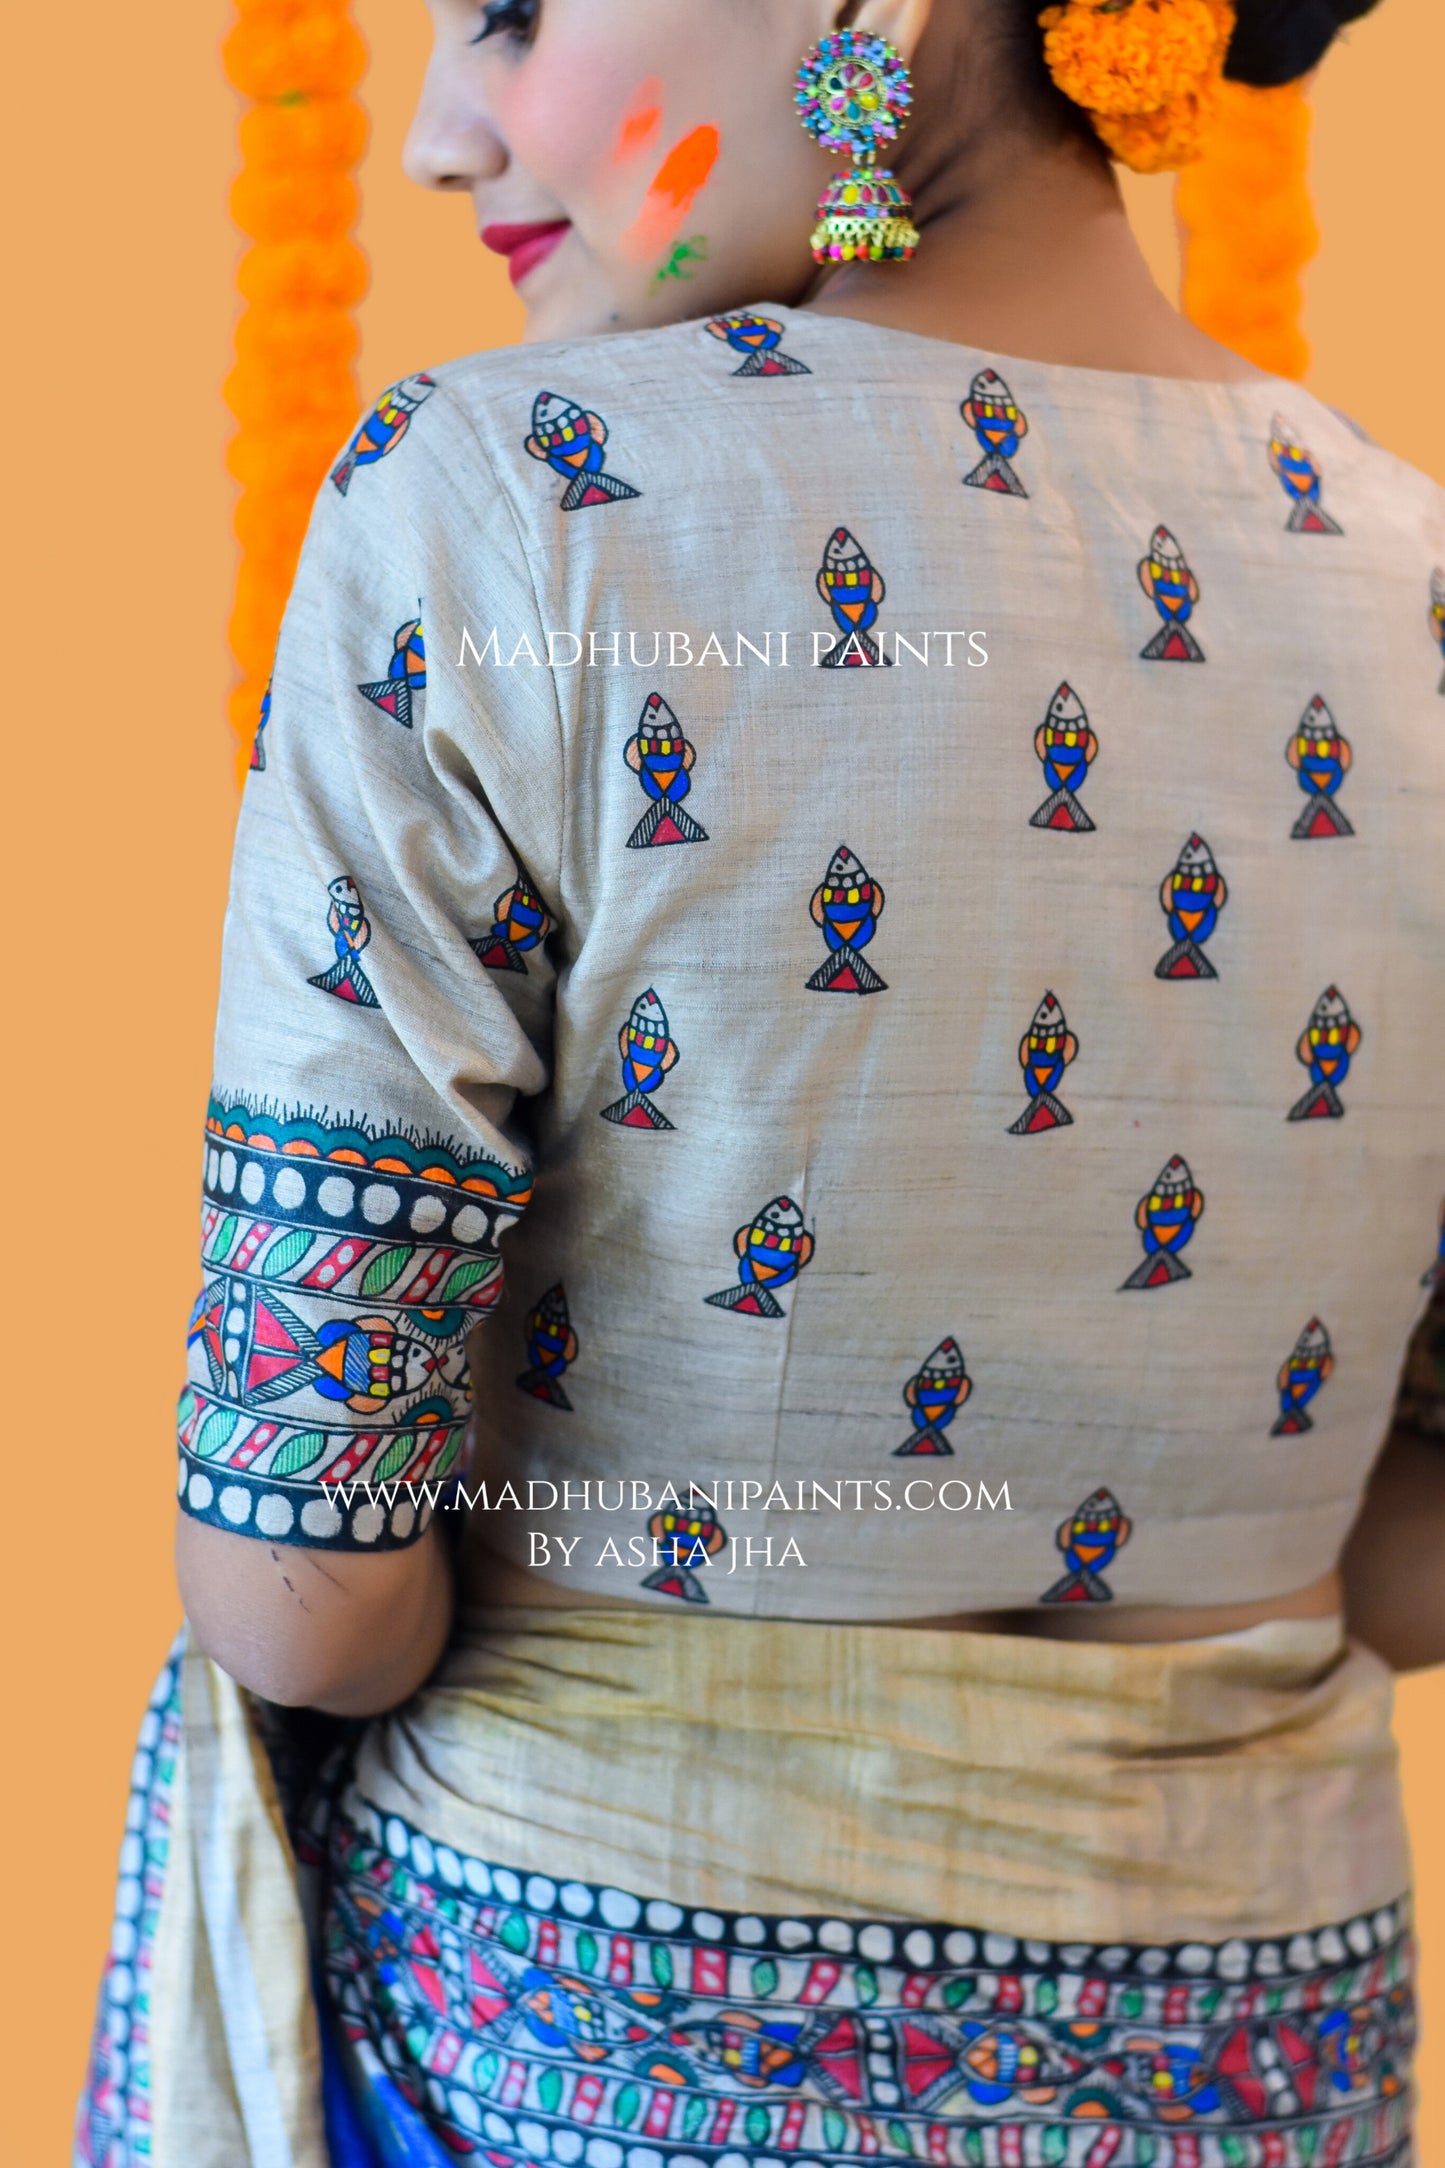 MATSYANGANA Hand-painted Bandhini Madhubani Tussar Silk Blouse